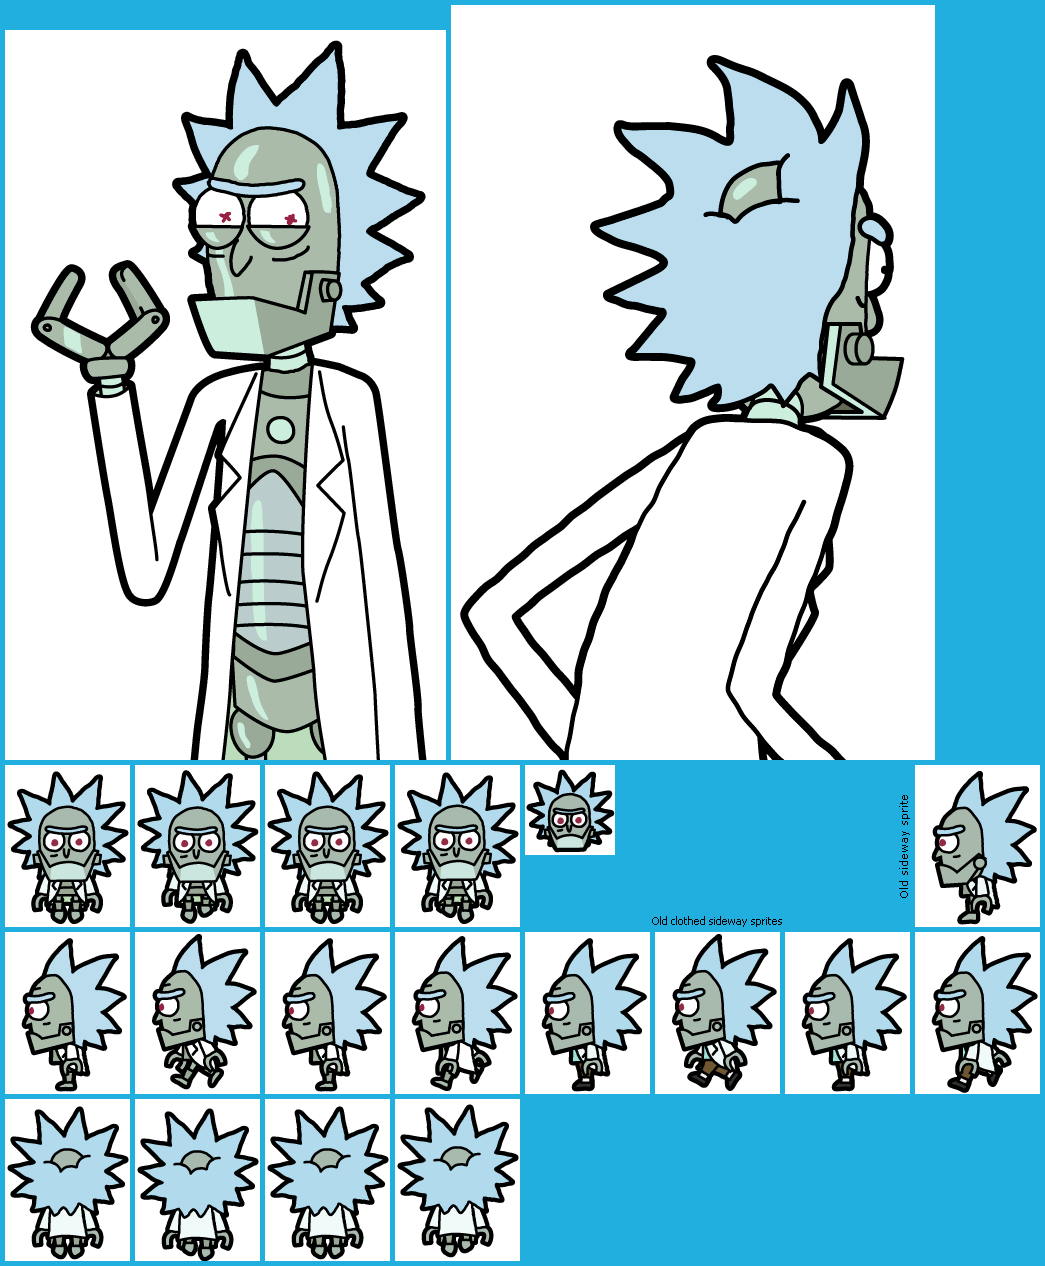 Pocket Mortys - Robot Rick